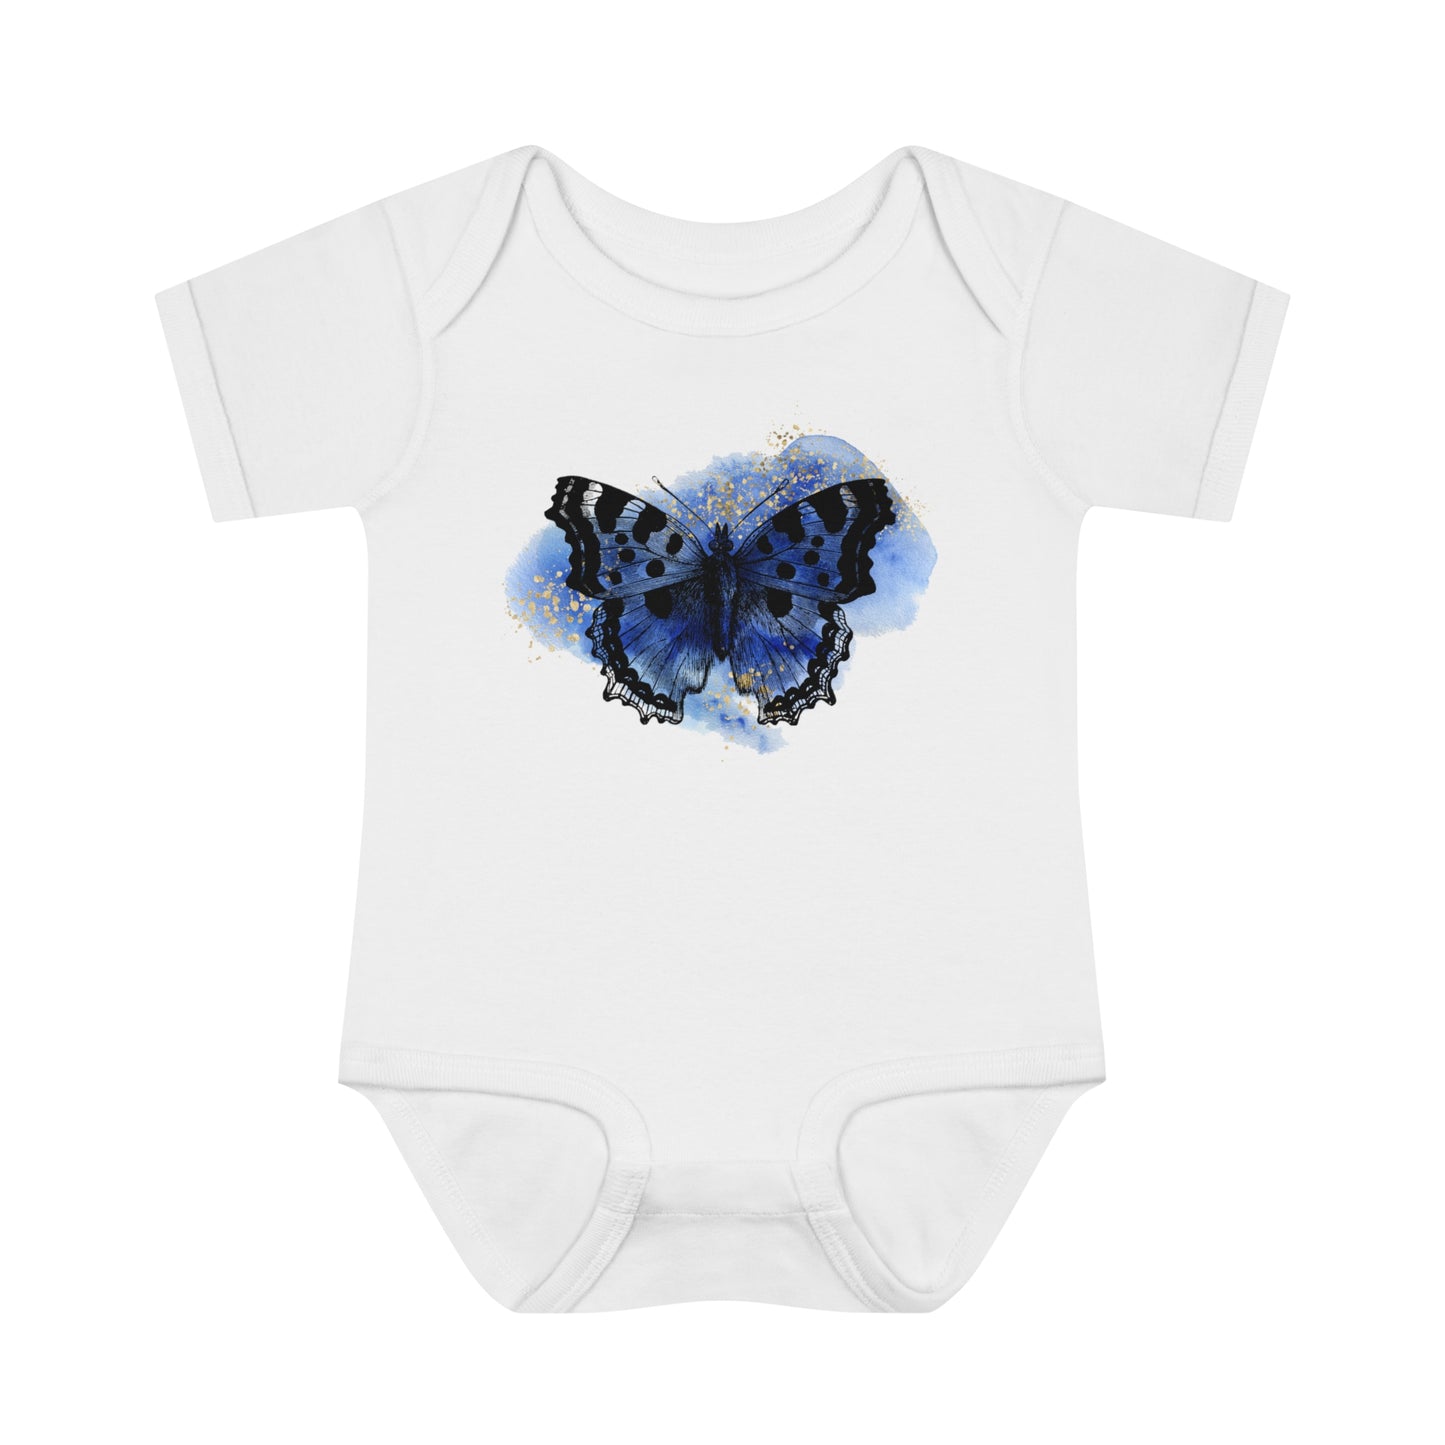 Infant Baby Rib Bodysuit, Butterfly Onesie, Christian Onesie, Baby Christian